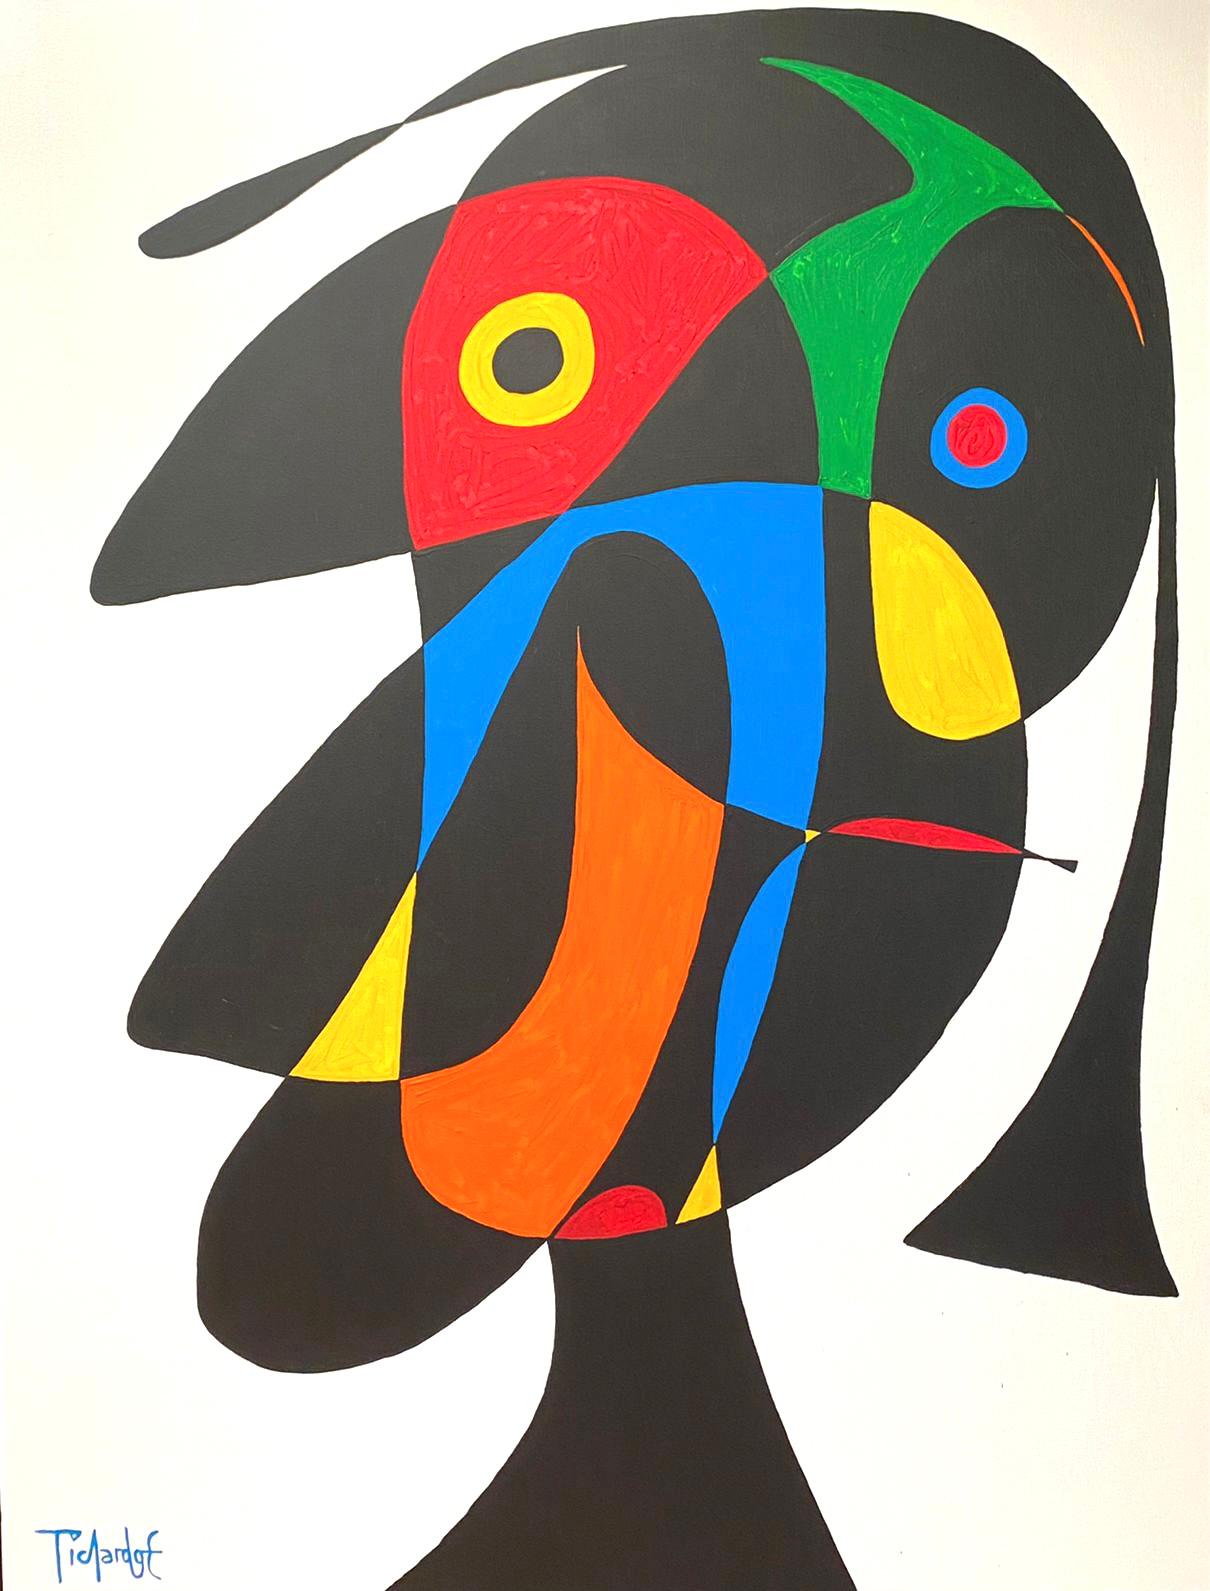 Contemporary Art, Abstract Painting
Acrylic on canvas
170x130cm
Signed 




About the artist
Enrique Pichardo (Mexico City, 1973) graduated from Escuela Nacional de Pintura, Escultura y Grabado (ENPEG) “La Esmeralda”. As a Mexican Contemporary